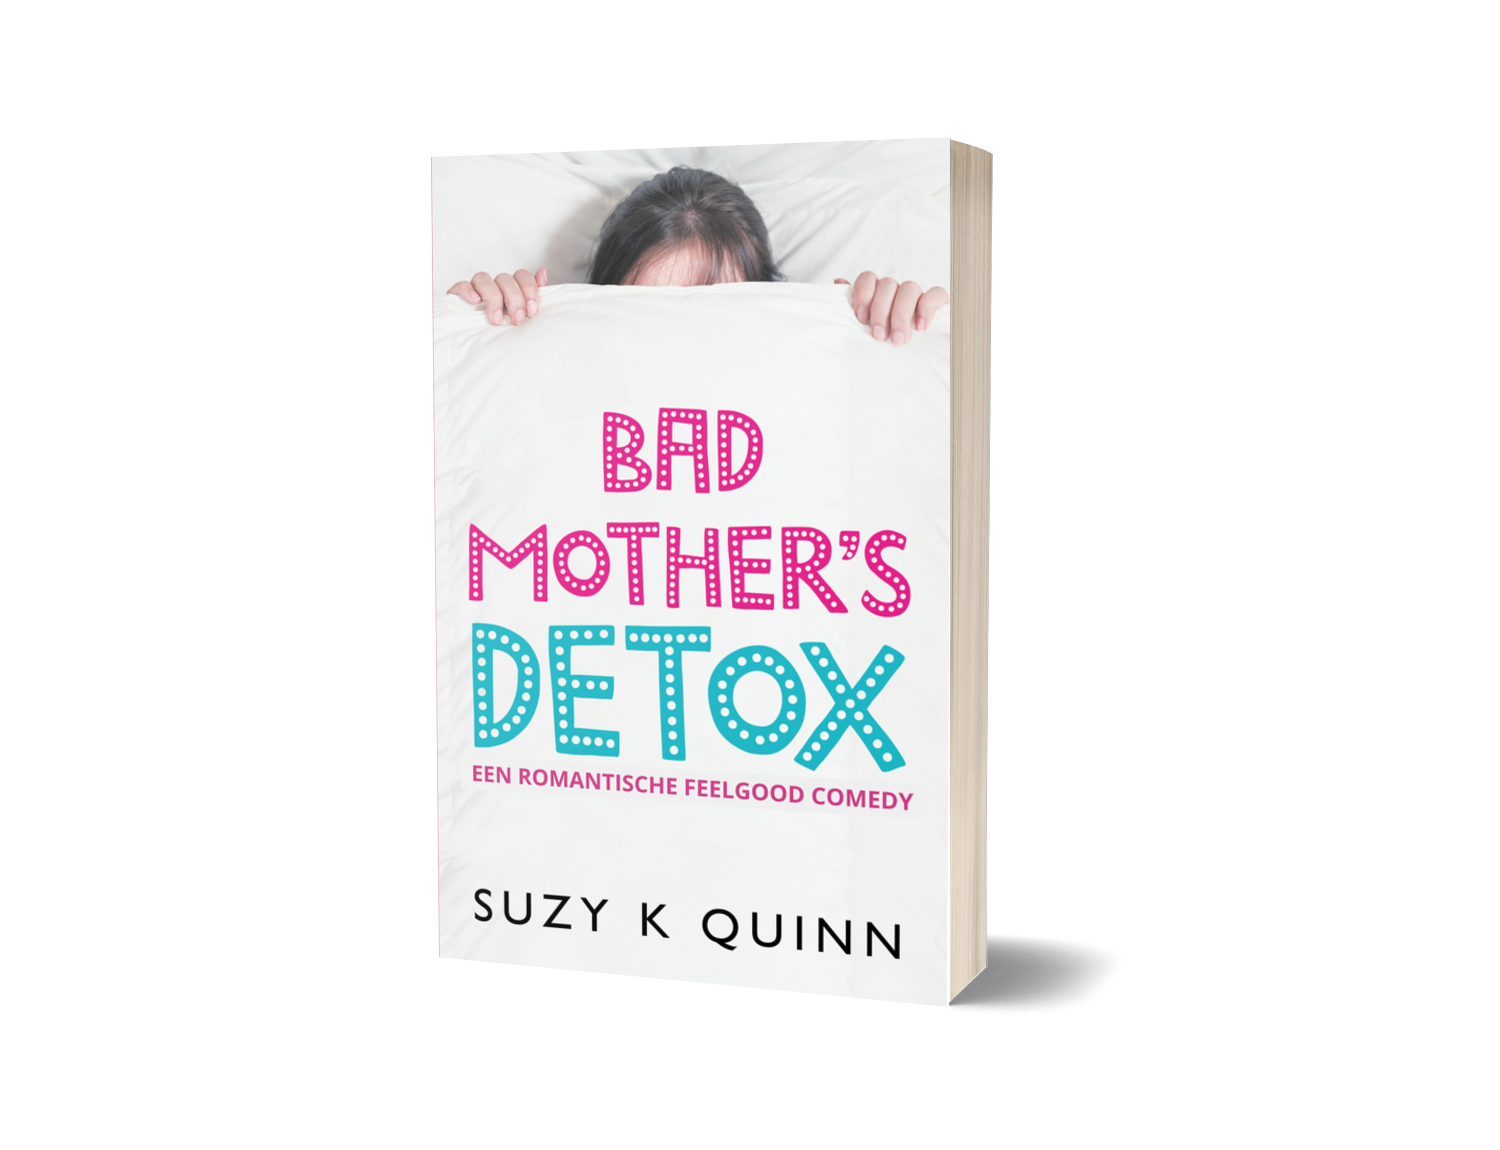 Bad Mother's Detox (Boek #2) / Suzy K Quinn